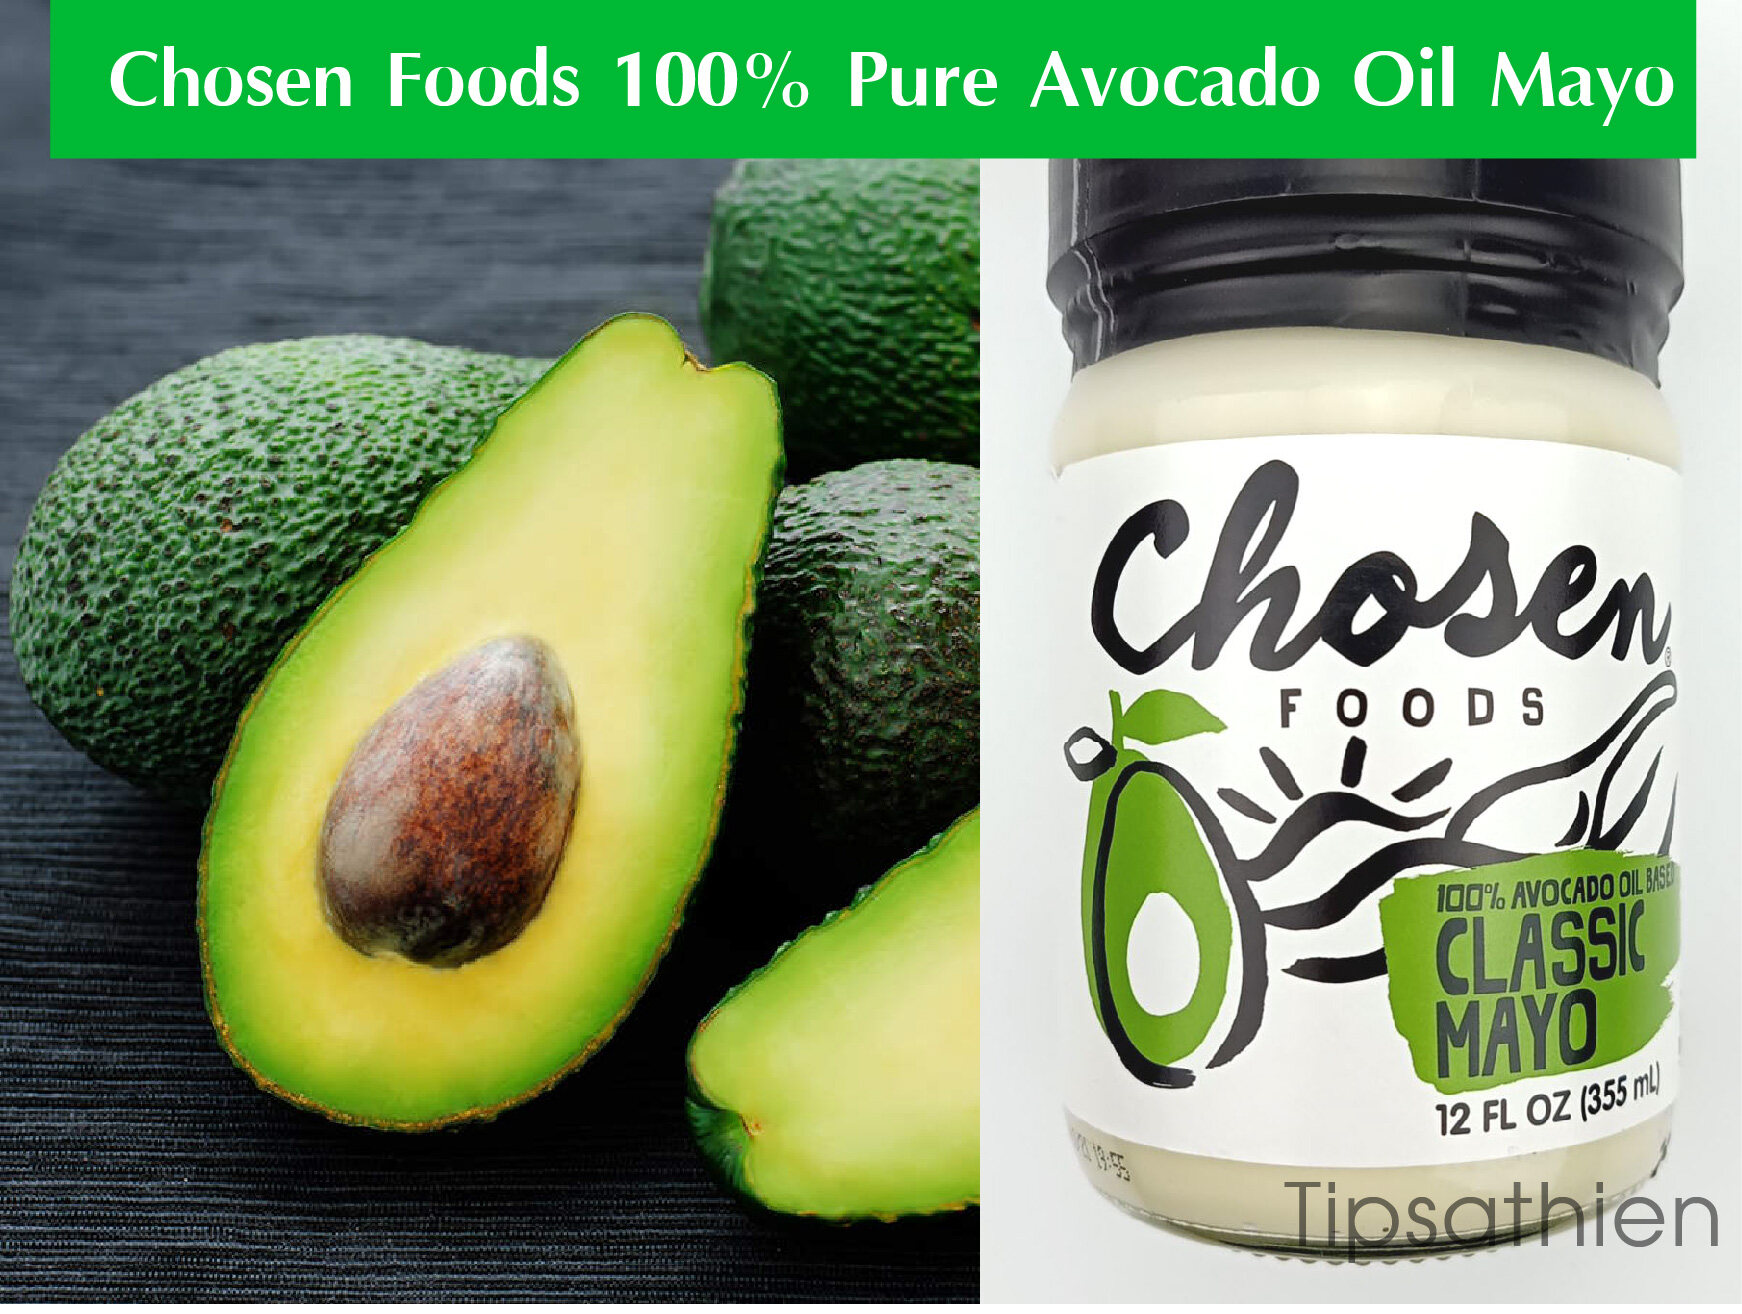 Chosen Foods , MAYO,น้ำสลัด มาโย น้ำมันอะโวคาโด , 355 ml , MAYO Avocado oil Chosen foods. 100% Pure Avocado Oil มายองเนส เพื่อสุขภาพจาก น้ำมันอโวคาโด 100%PURE AVOCADO OIL MAYO